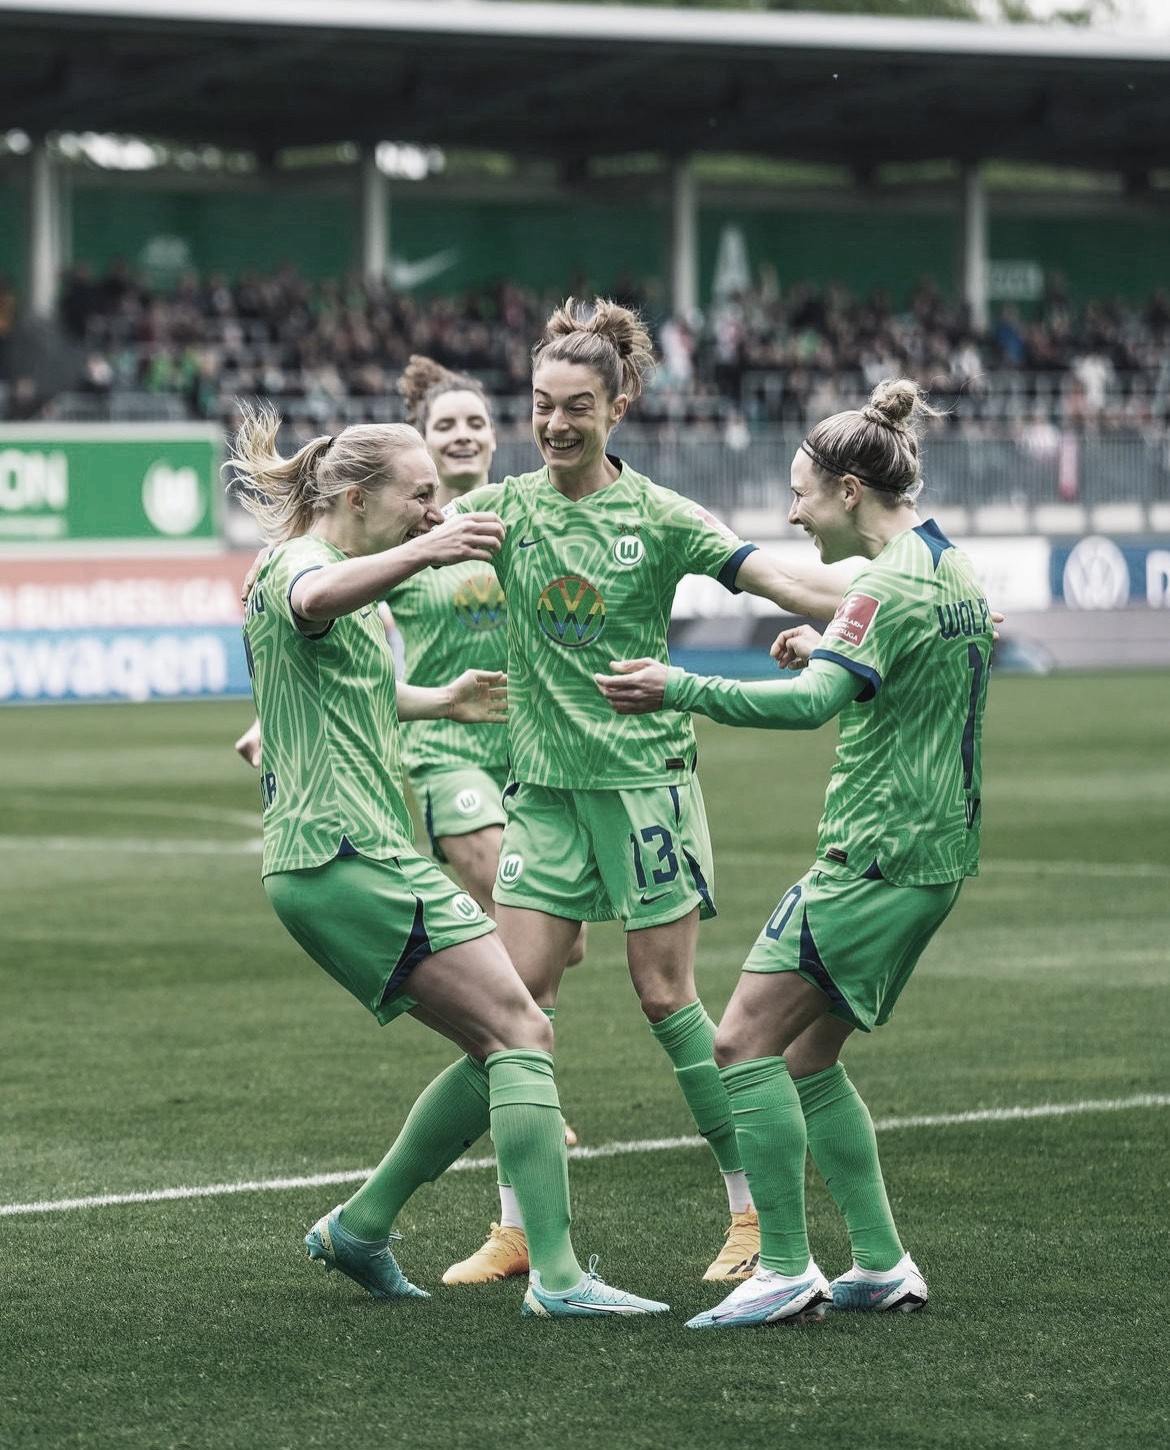 Wolfsburg busca título da Women's Champions League